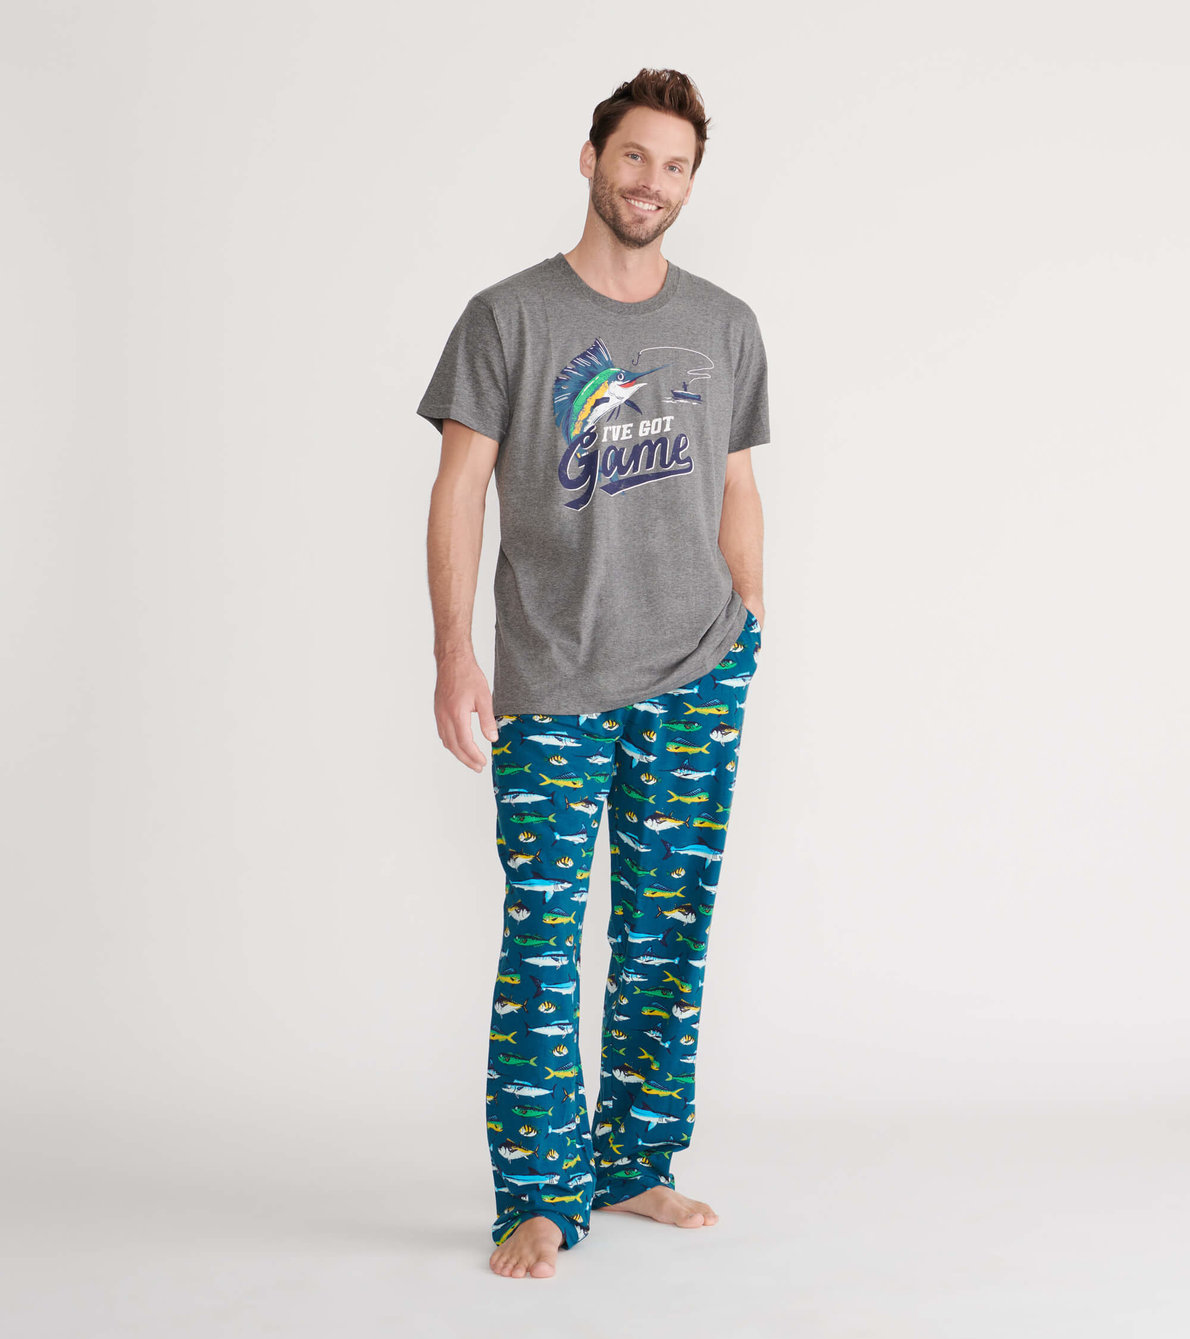 View larger image of Game Fish Men's Tee and Pants Pajama Separates